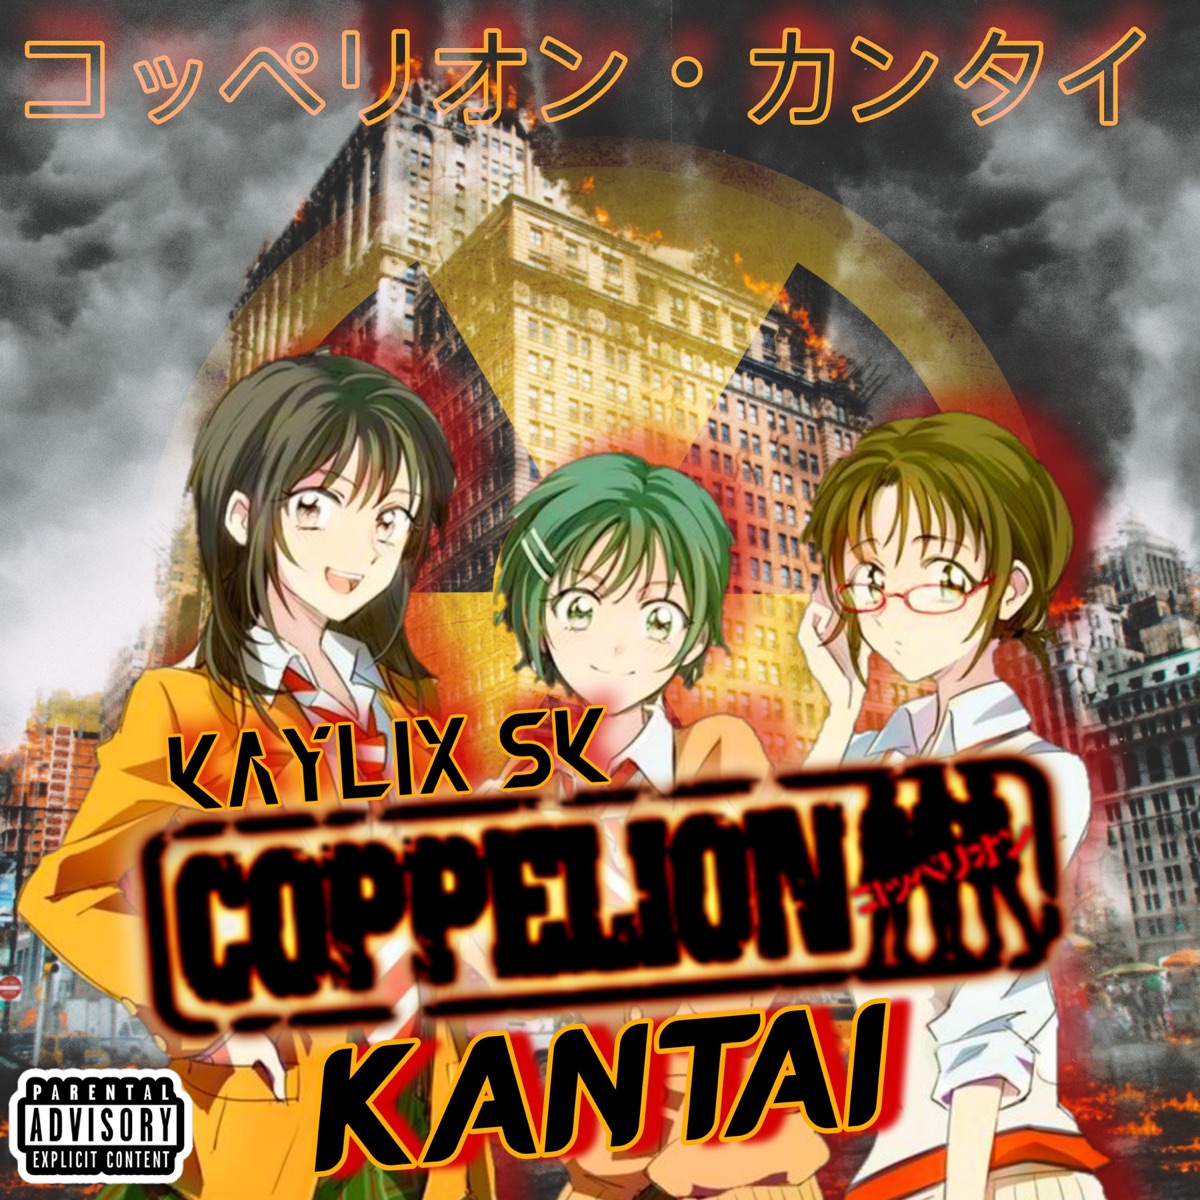 YAGAMI KAZUMA VS KUROGANE IKKI [Explicit] by KAYLIX SK on  Music 